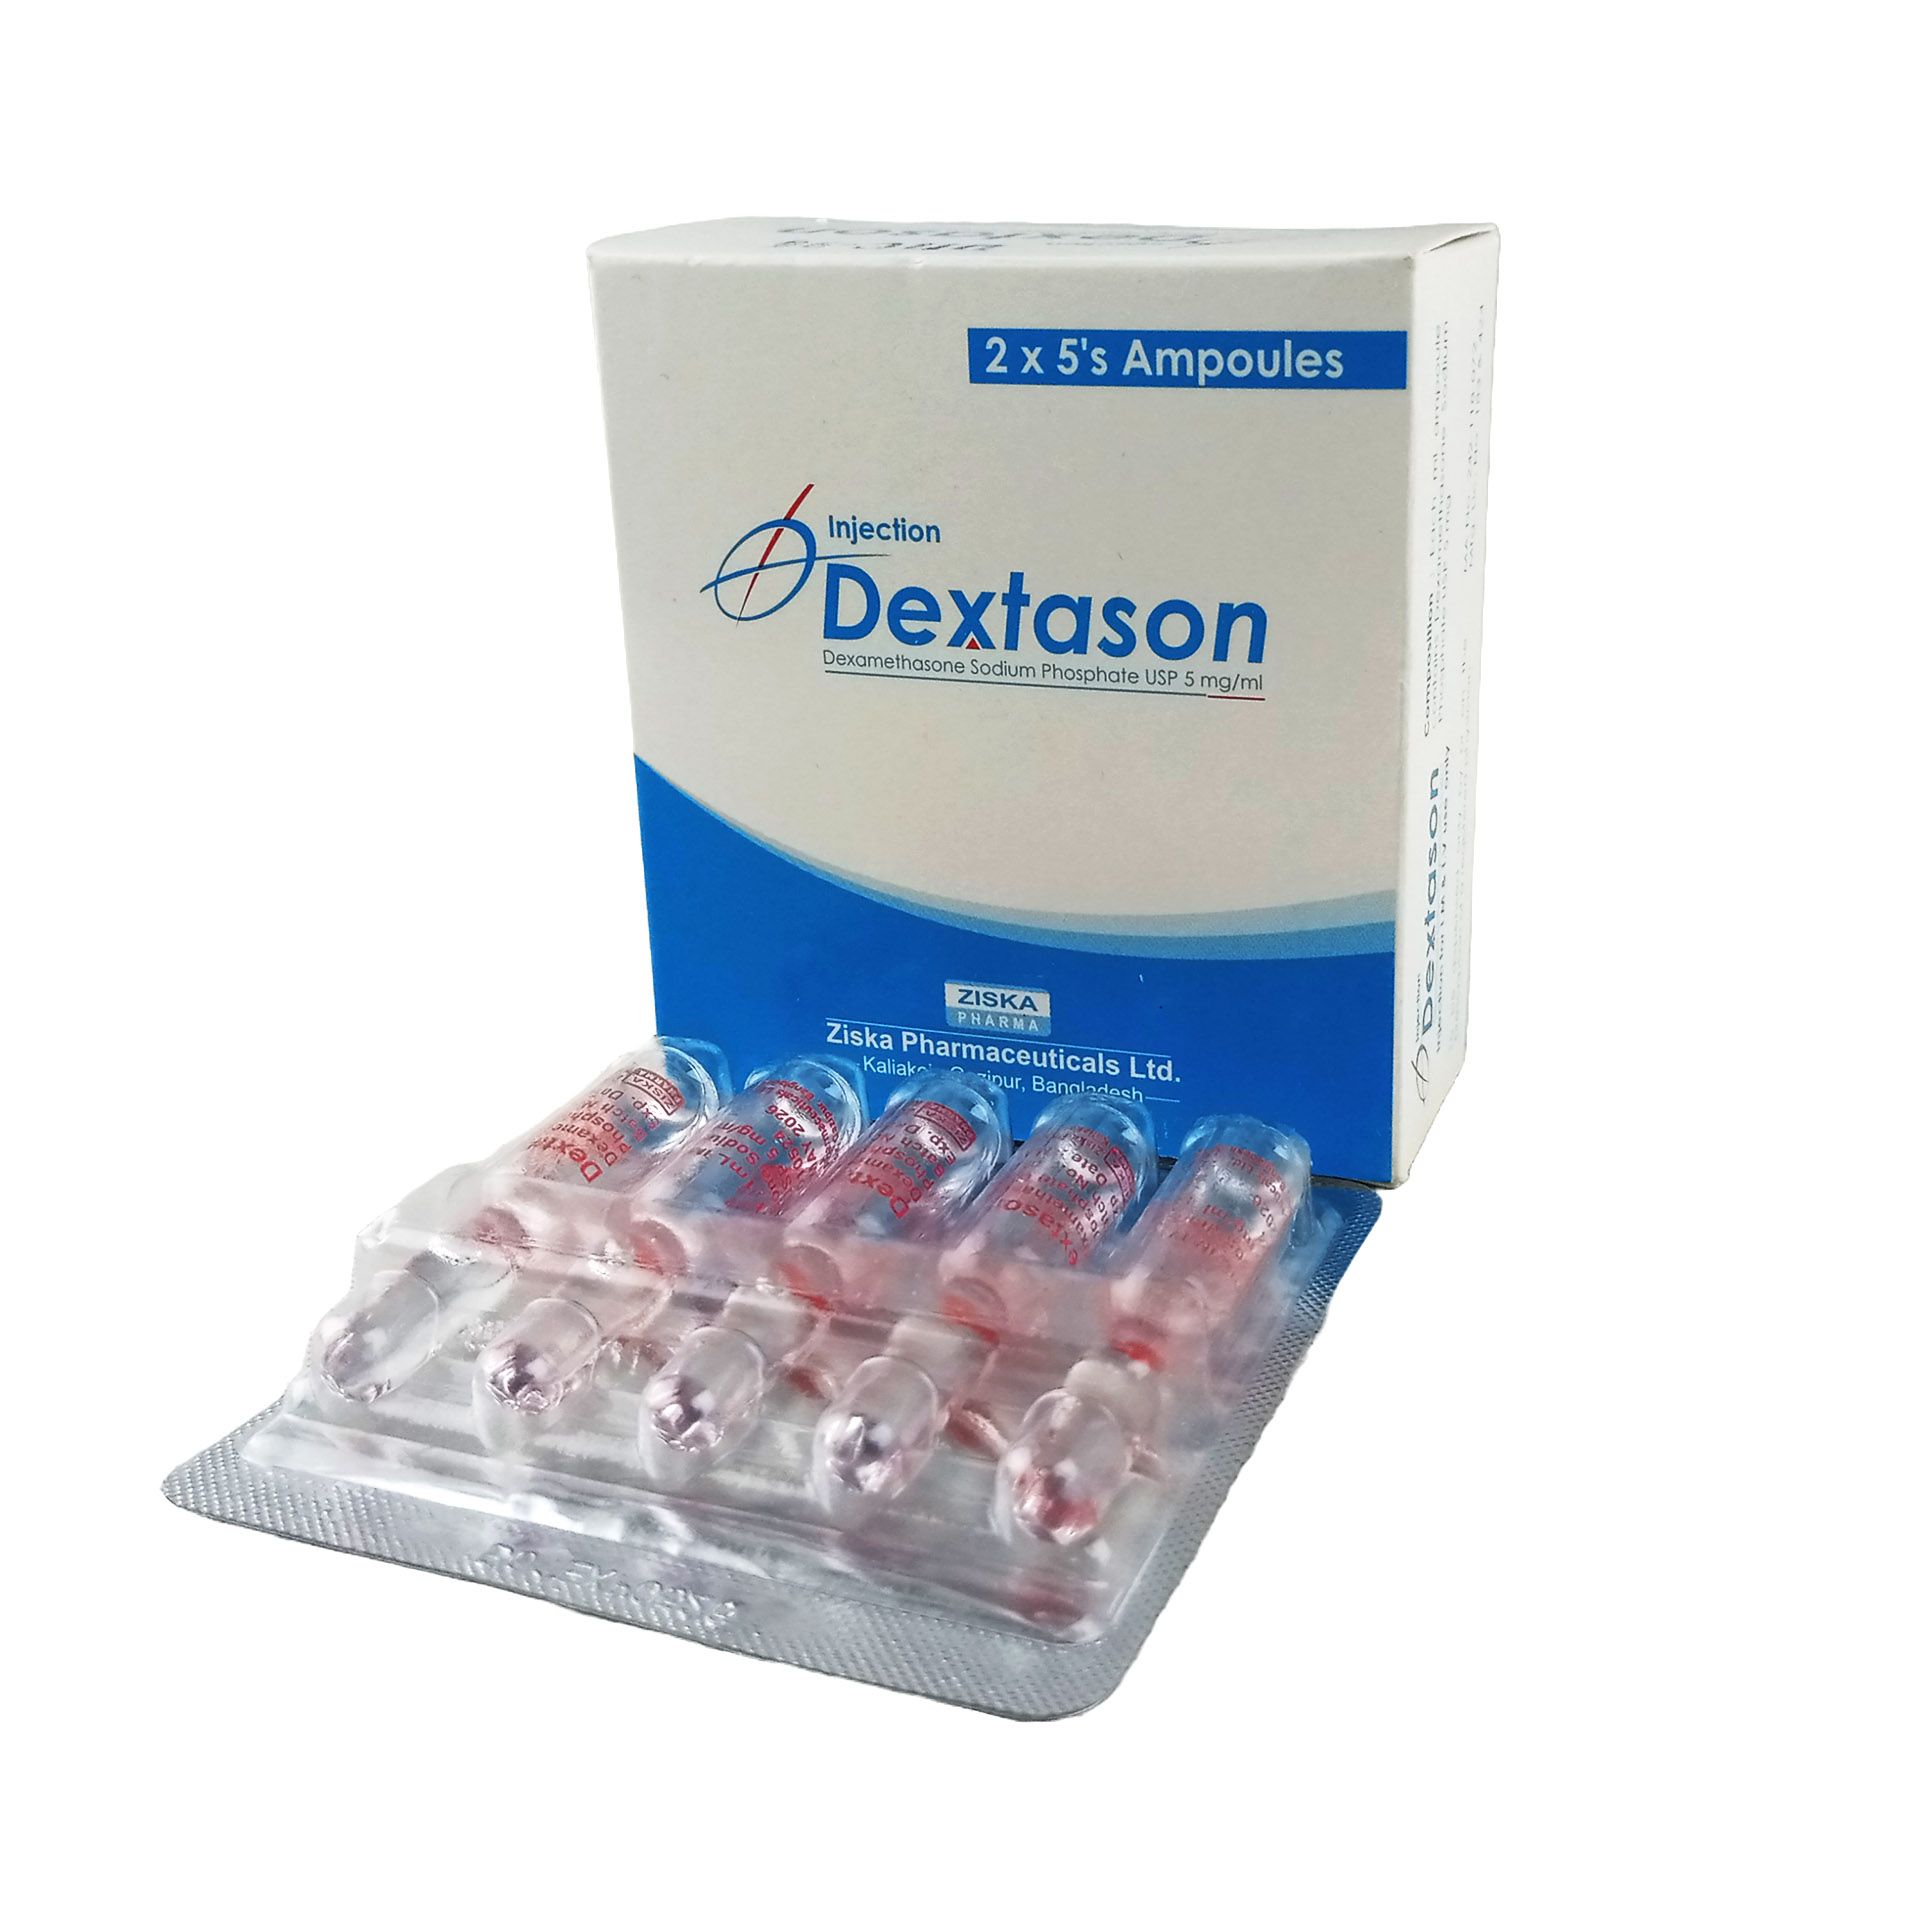 Dextason 5mg/ml Injection